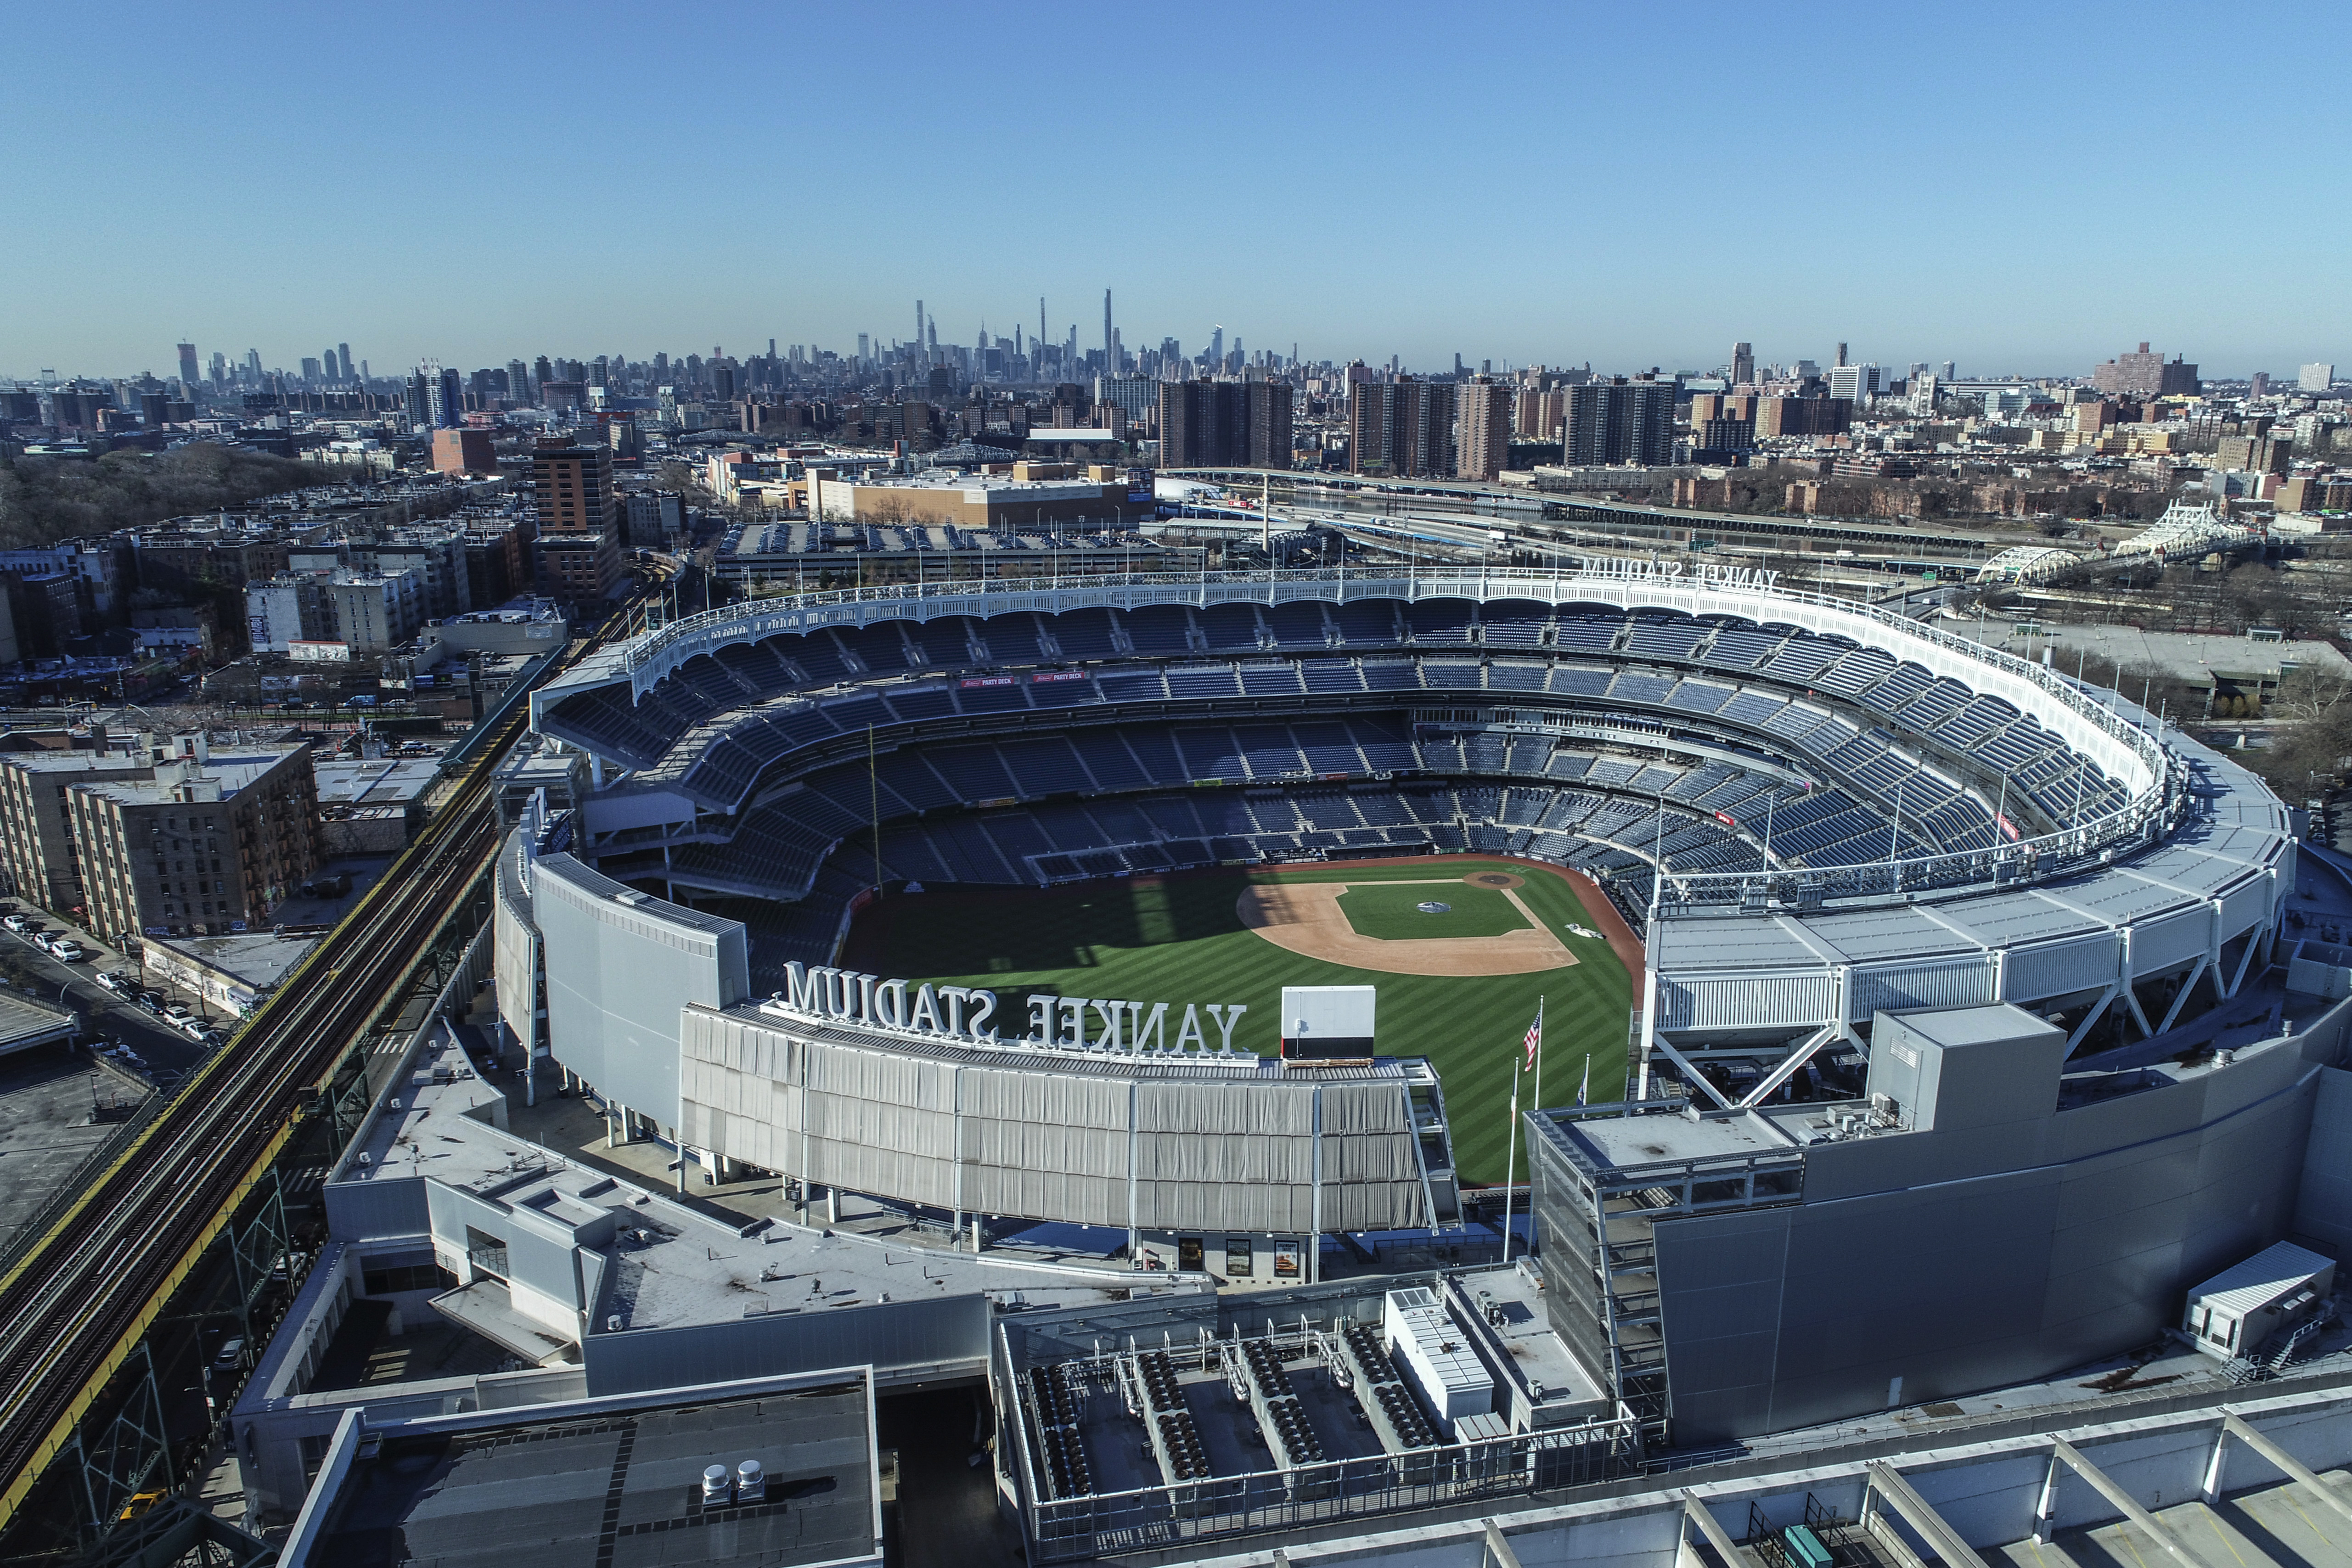 Yankee Stadium panned in fan survey of MLB ballparks 